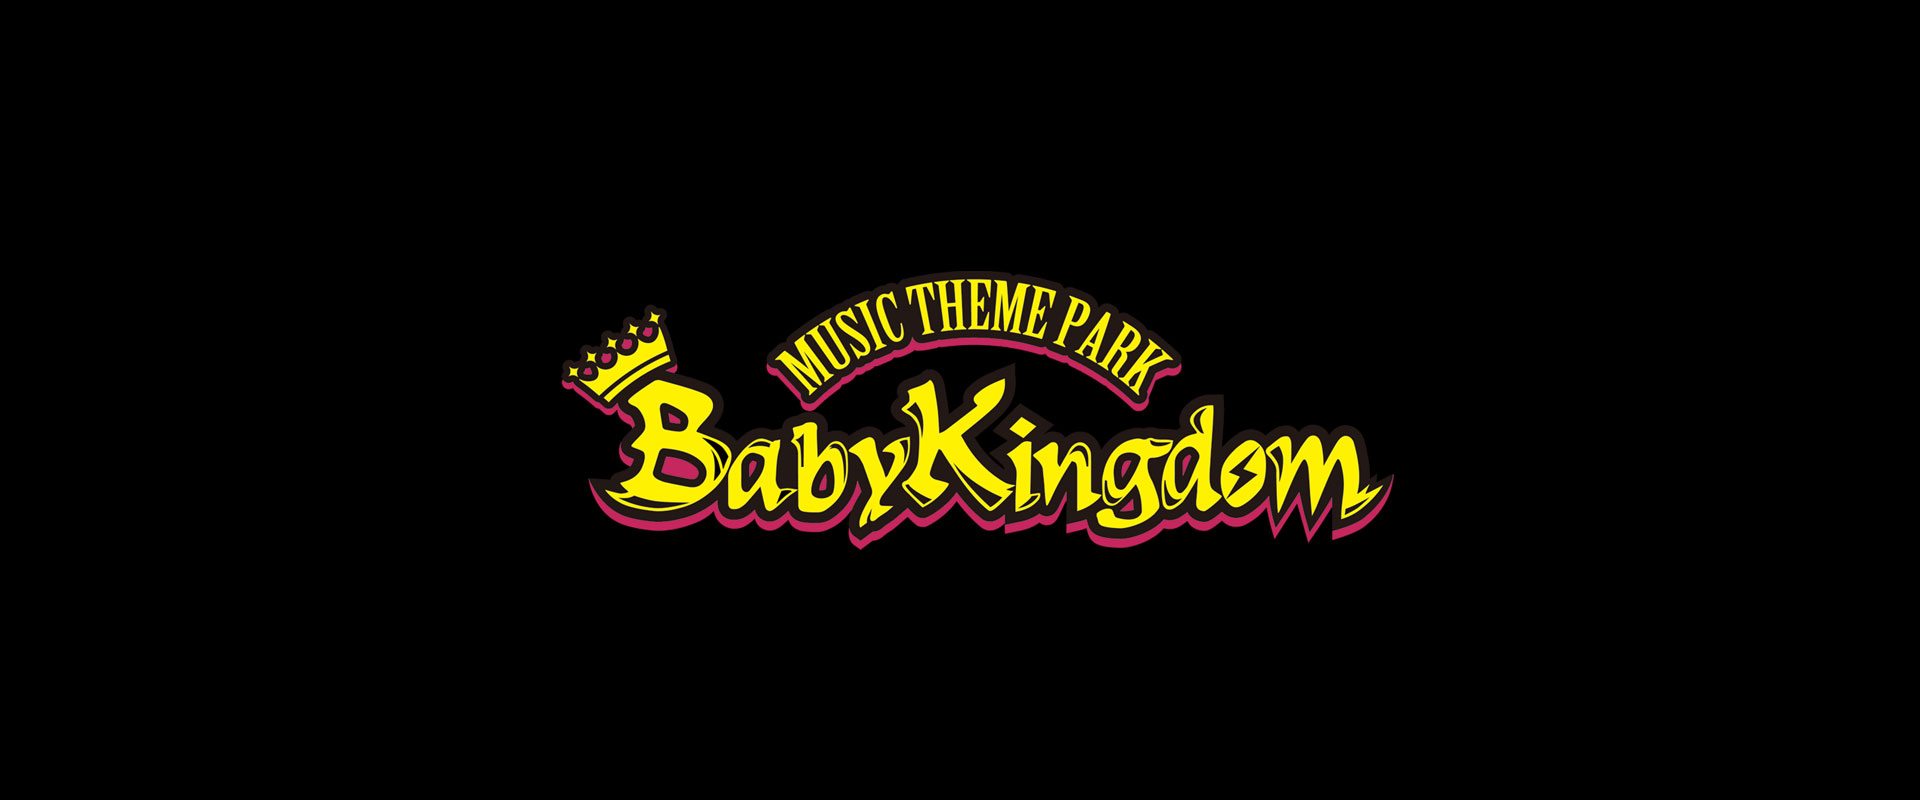 Babykingdom Official web site